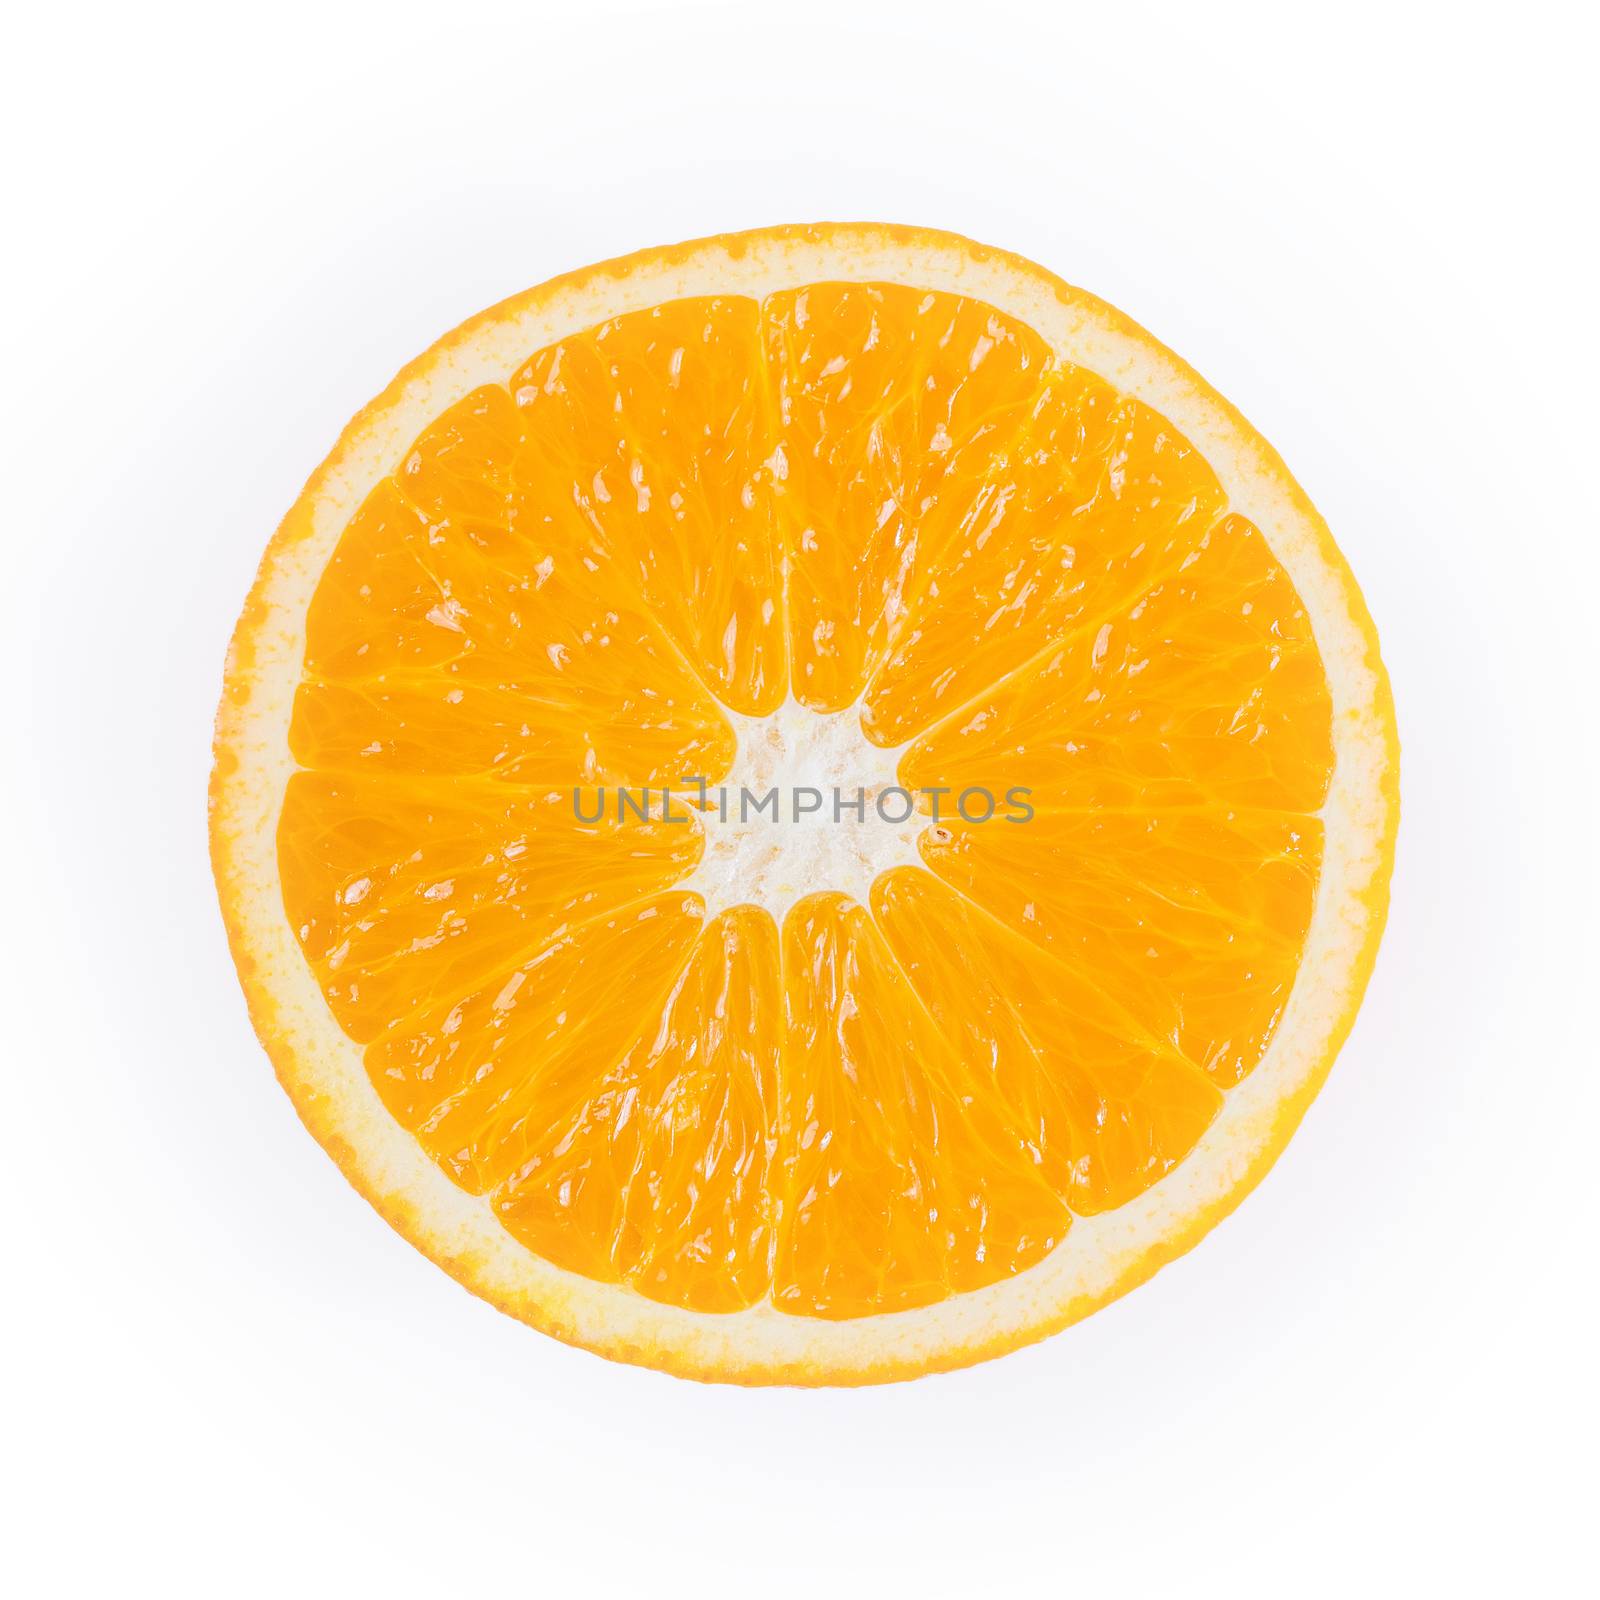 Slice of an orange by rufatjumali